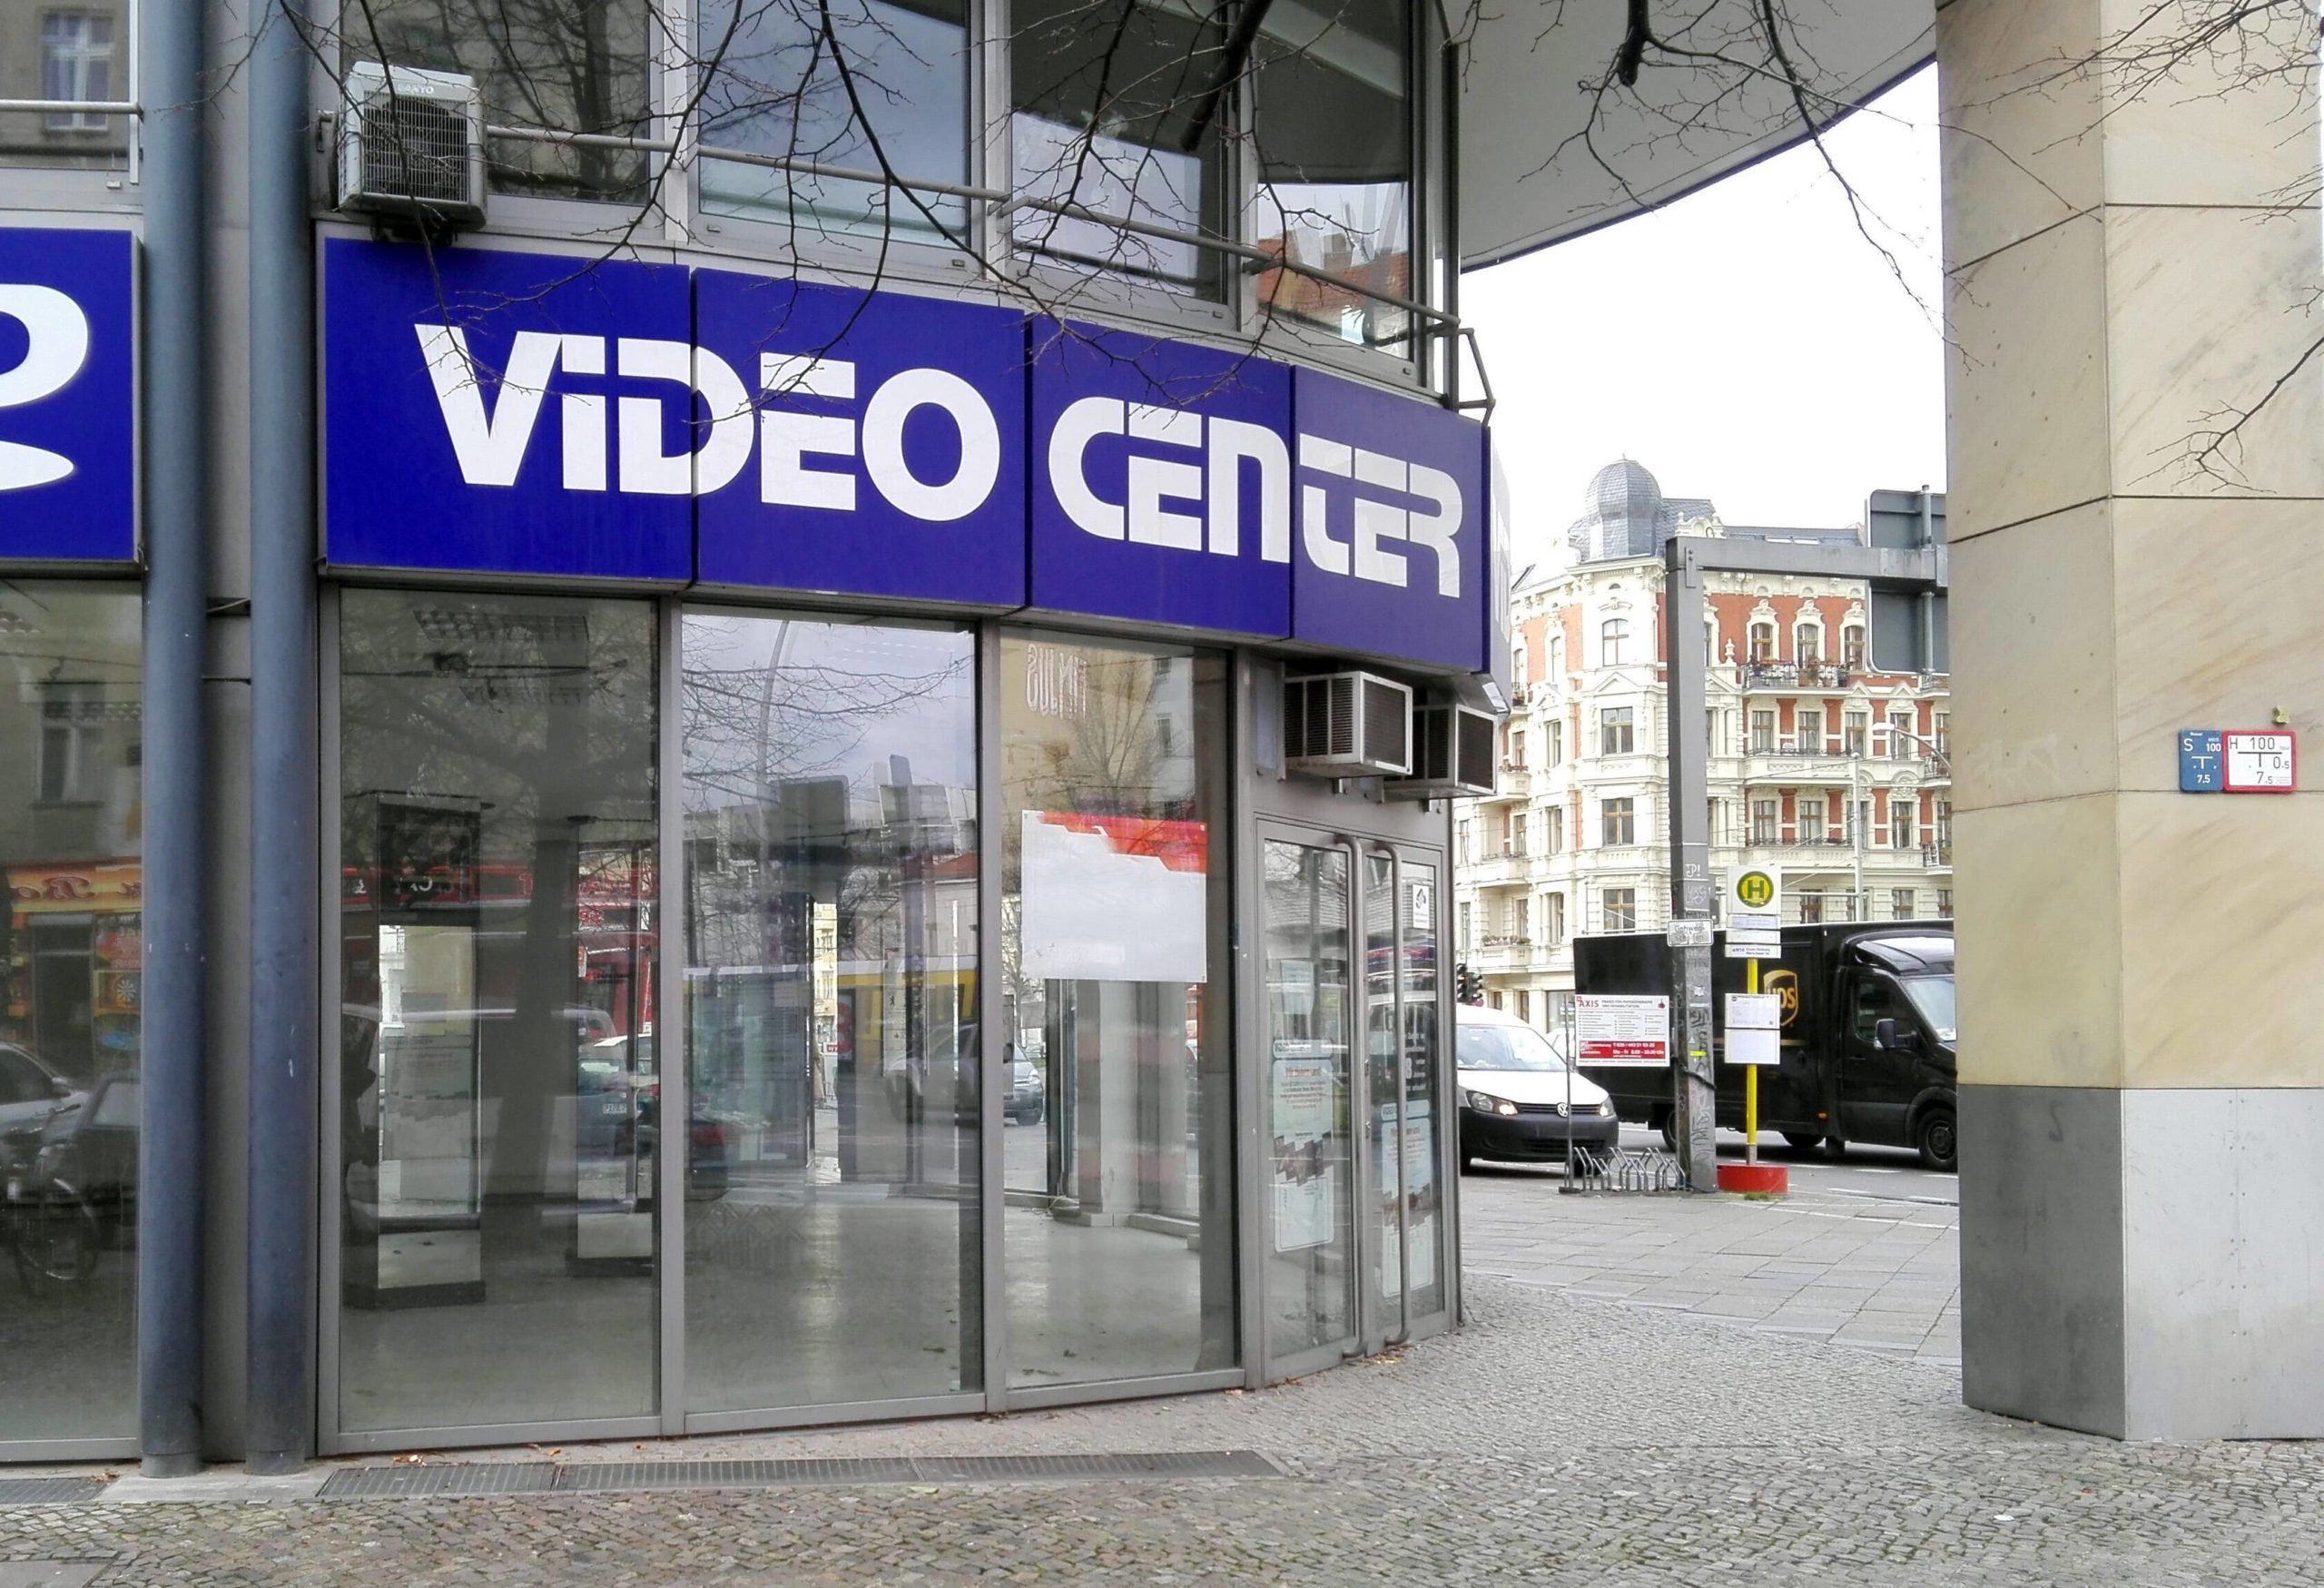 Videotheken in Berlin: Die Videothek Video Center leer, 2020. Foto: Imago/Sabine Gudath